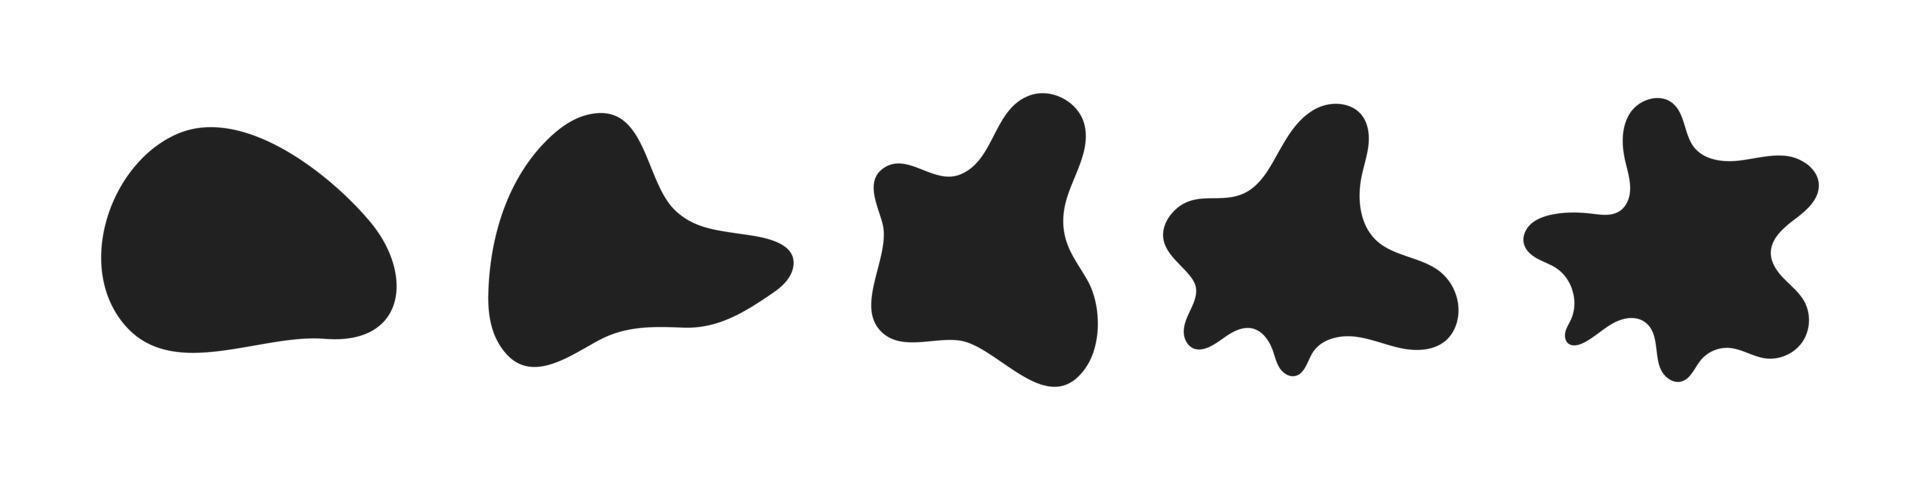 Abstract liquid organic black irregular blotch shapes flat style design fluid vector illustration set.